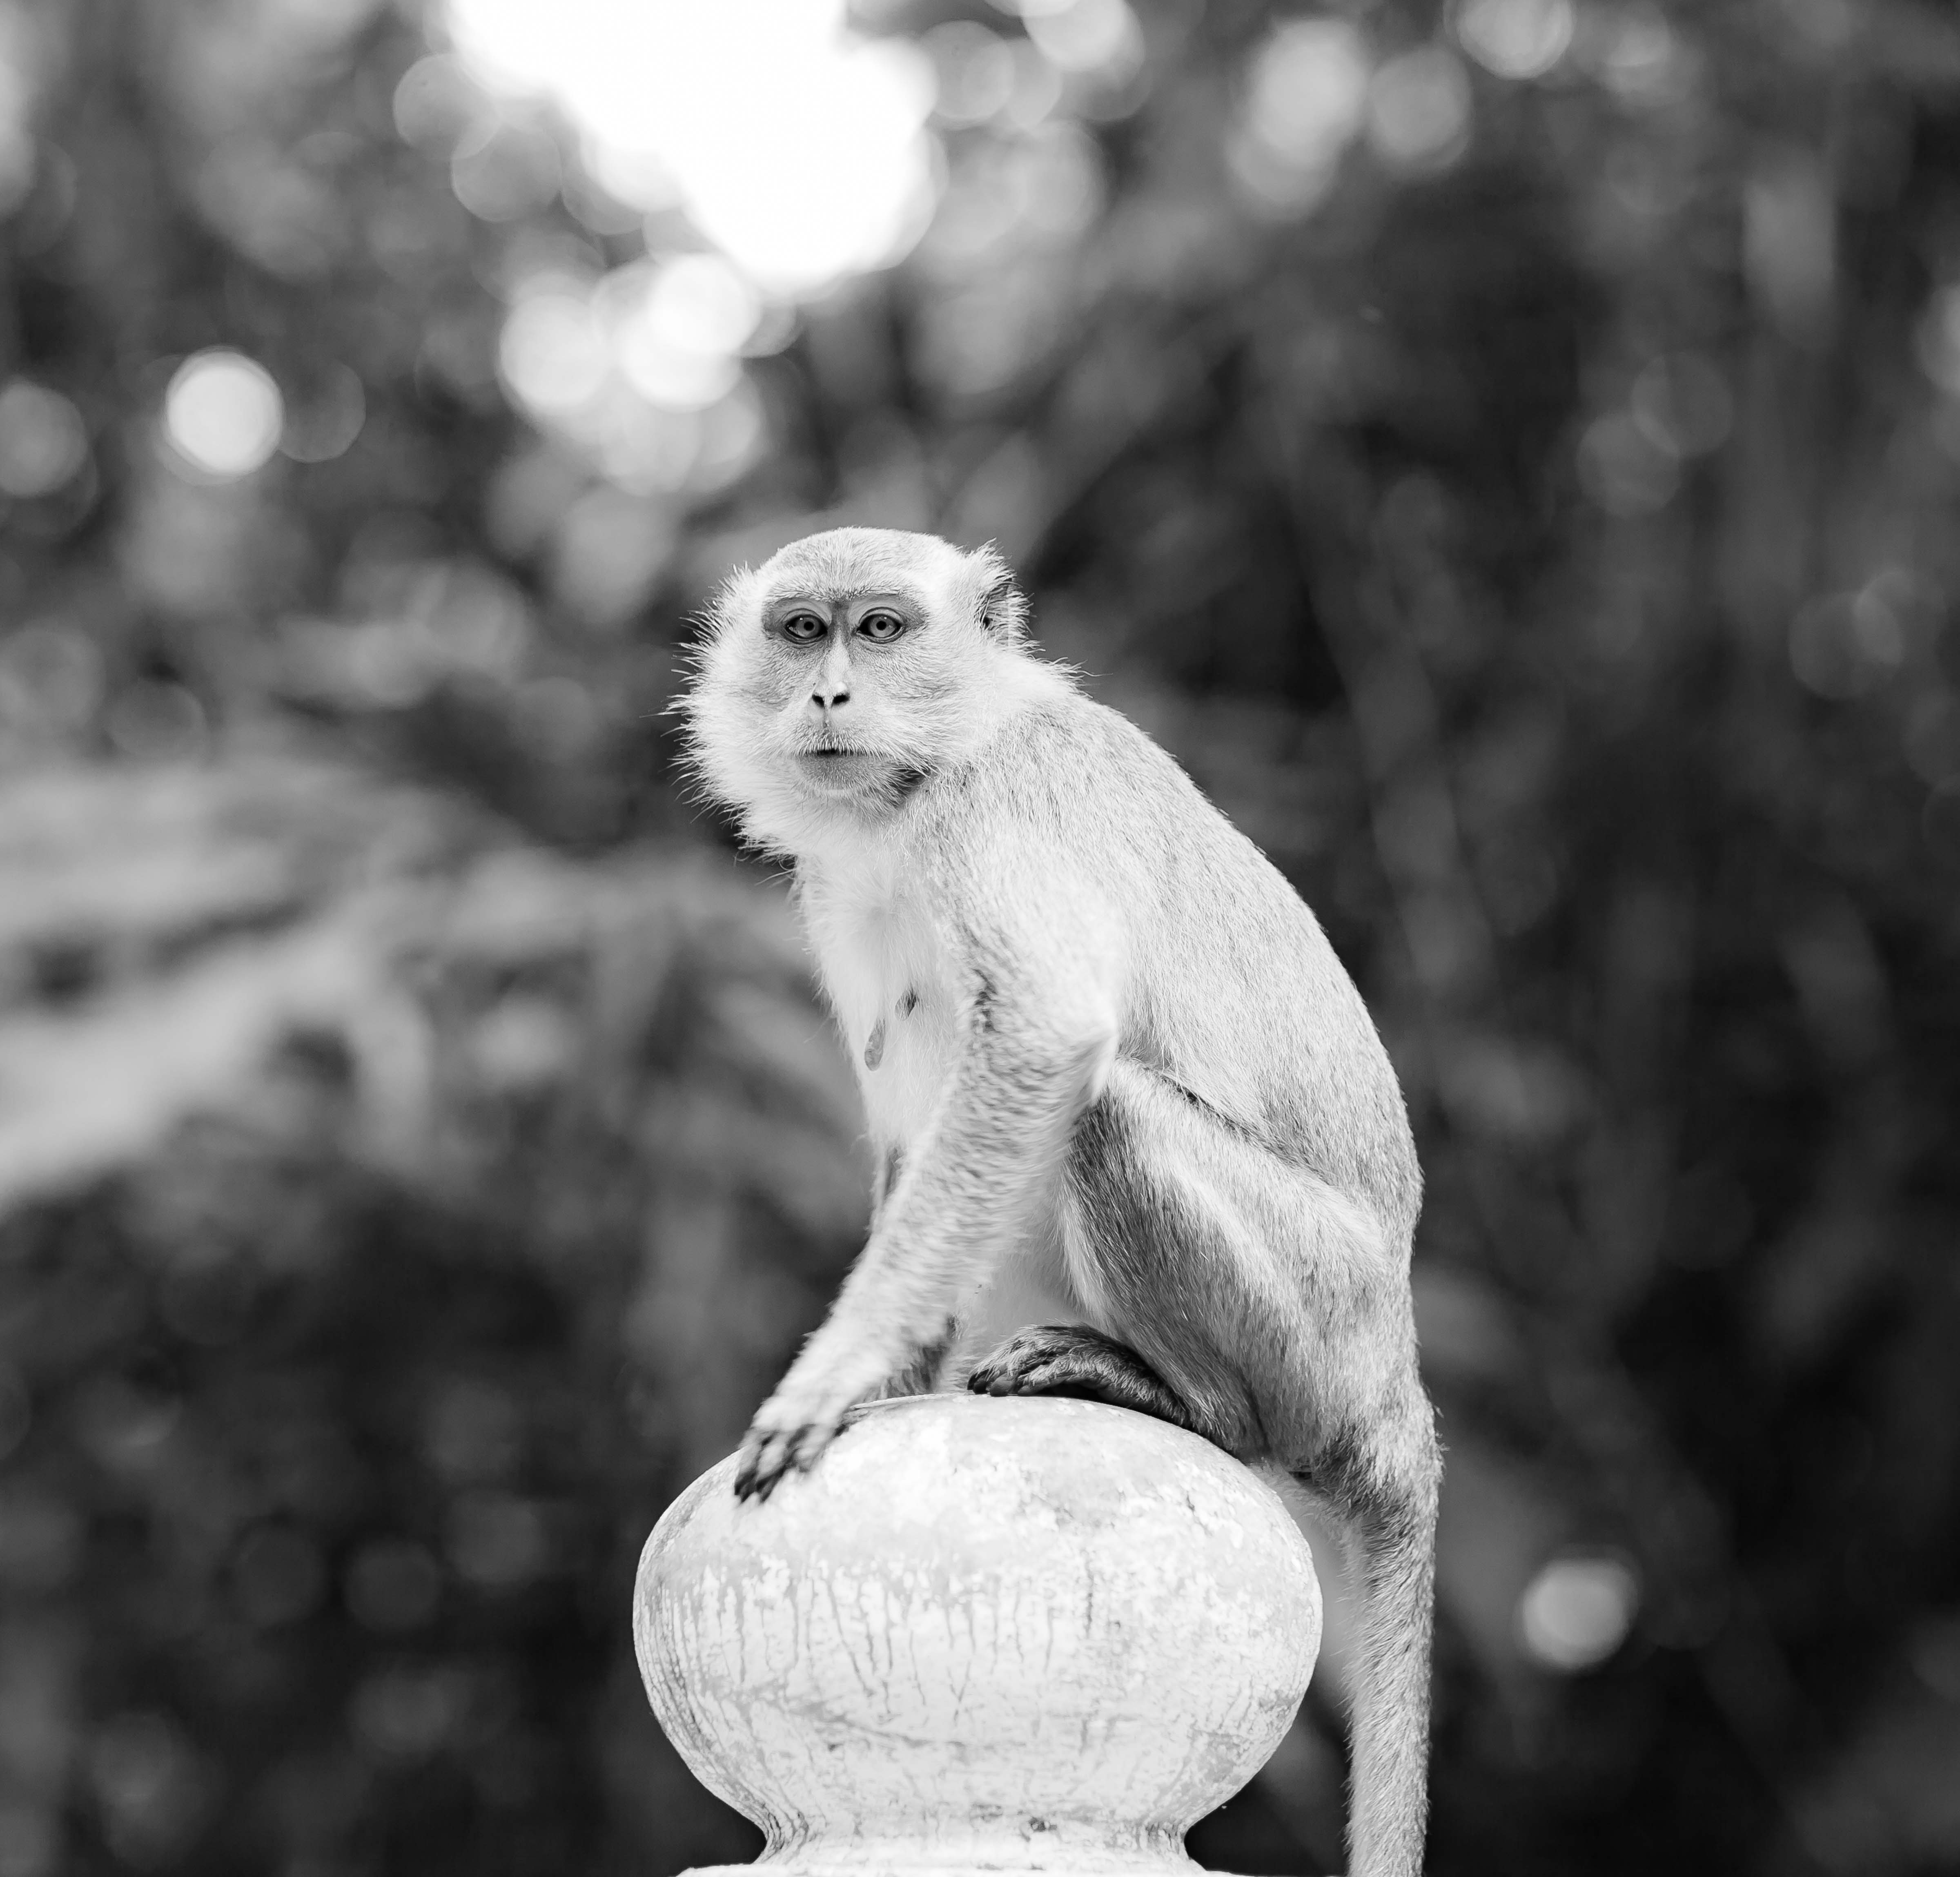 Philippines, Tawi Tawi Prov, Monkey, 2011, IMG 7398